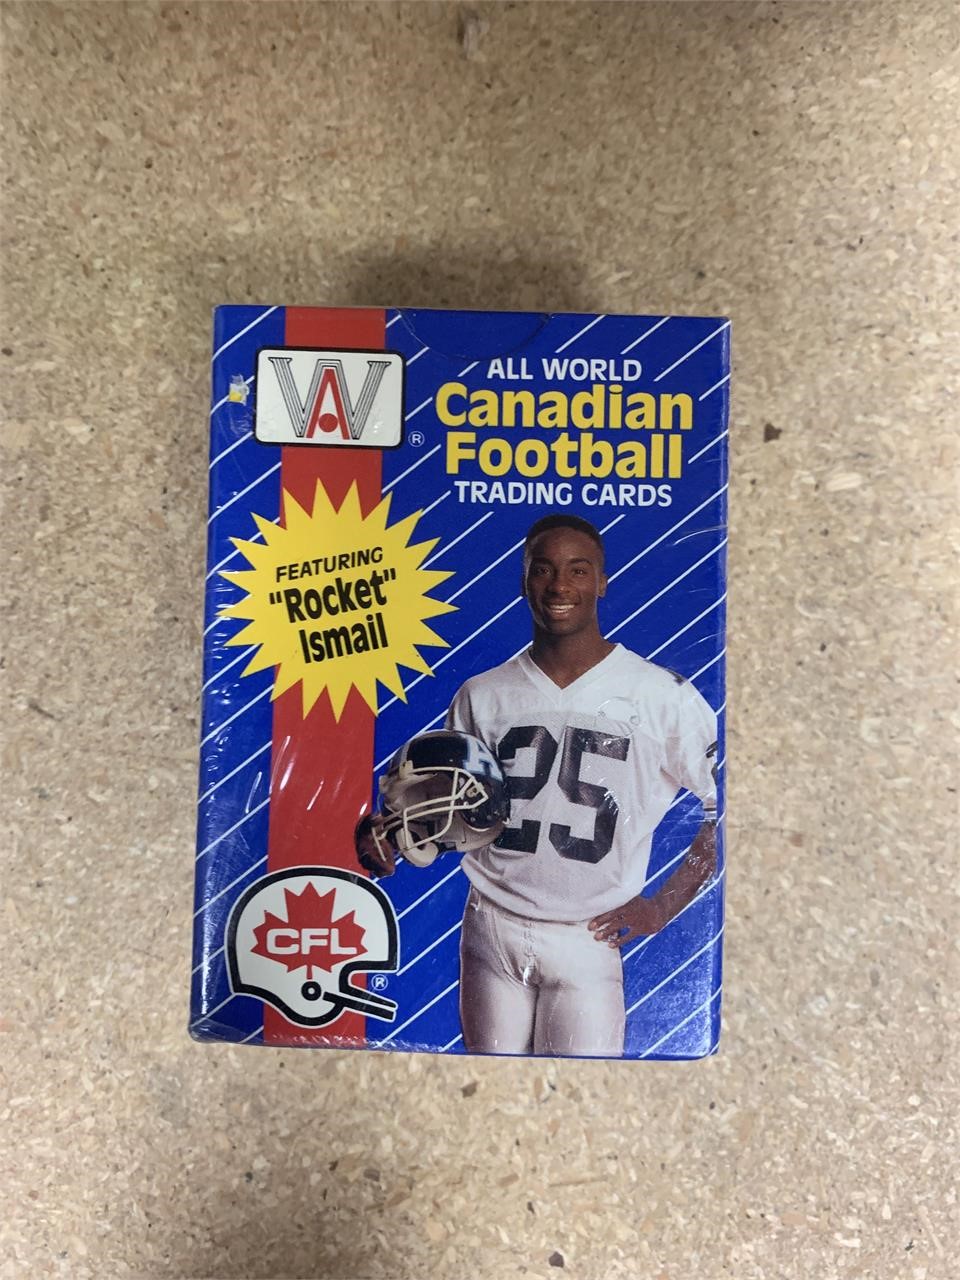 All World Canadian Football card box